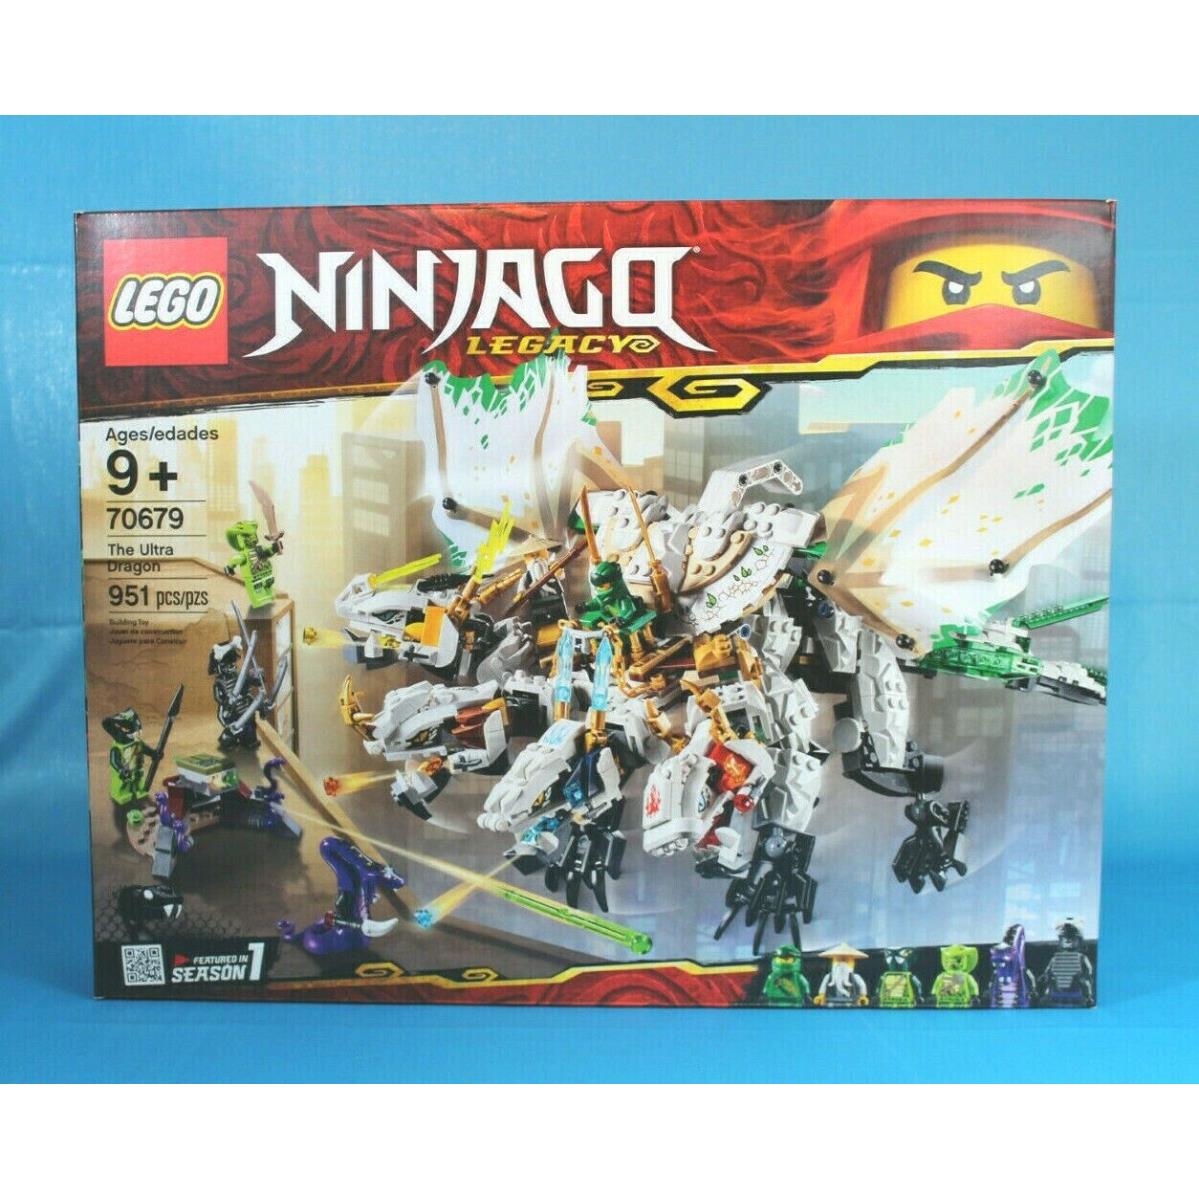 Lego Ninjago 70679 Legacy The Ultra Dragon Retired 2018